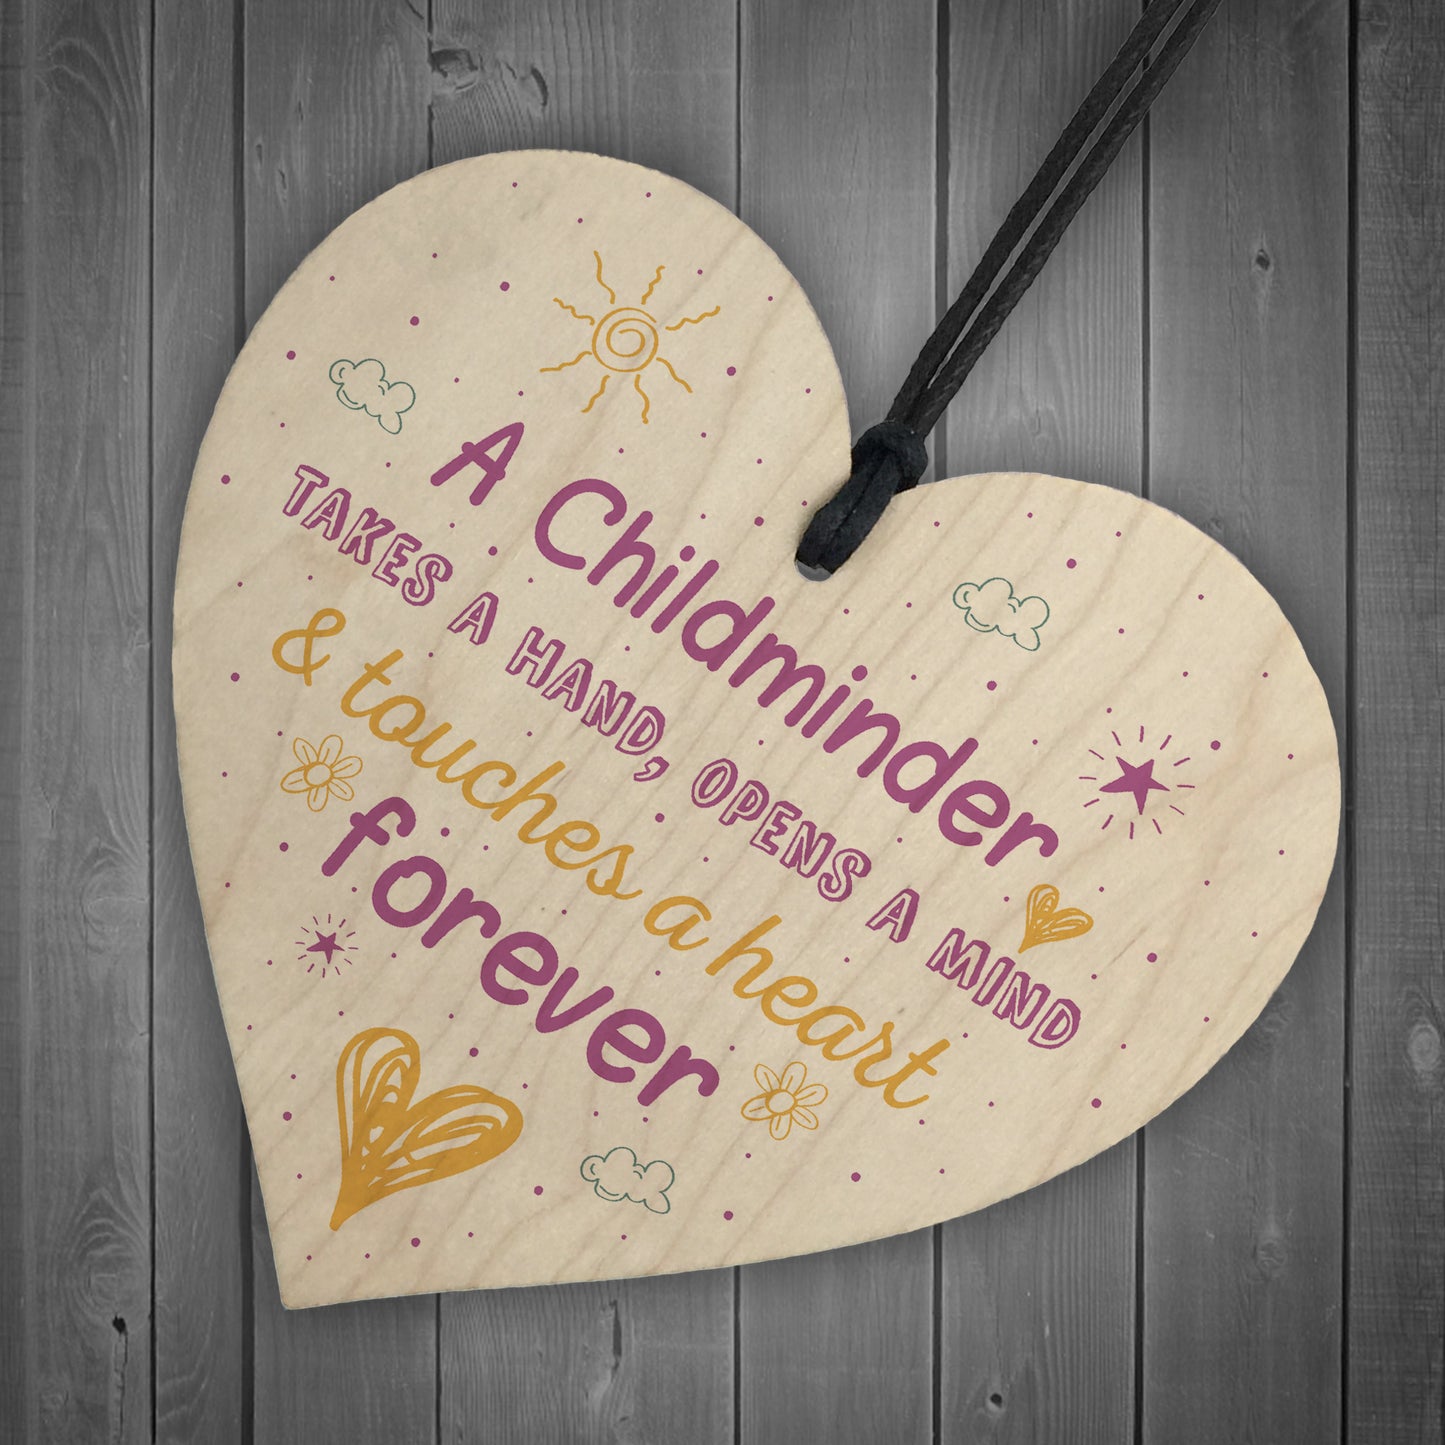 Handmade Wooden Hanging Heart Plaque Childminder Teacher Gift